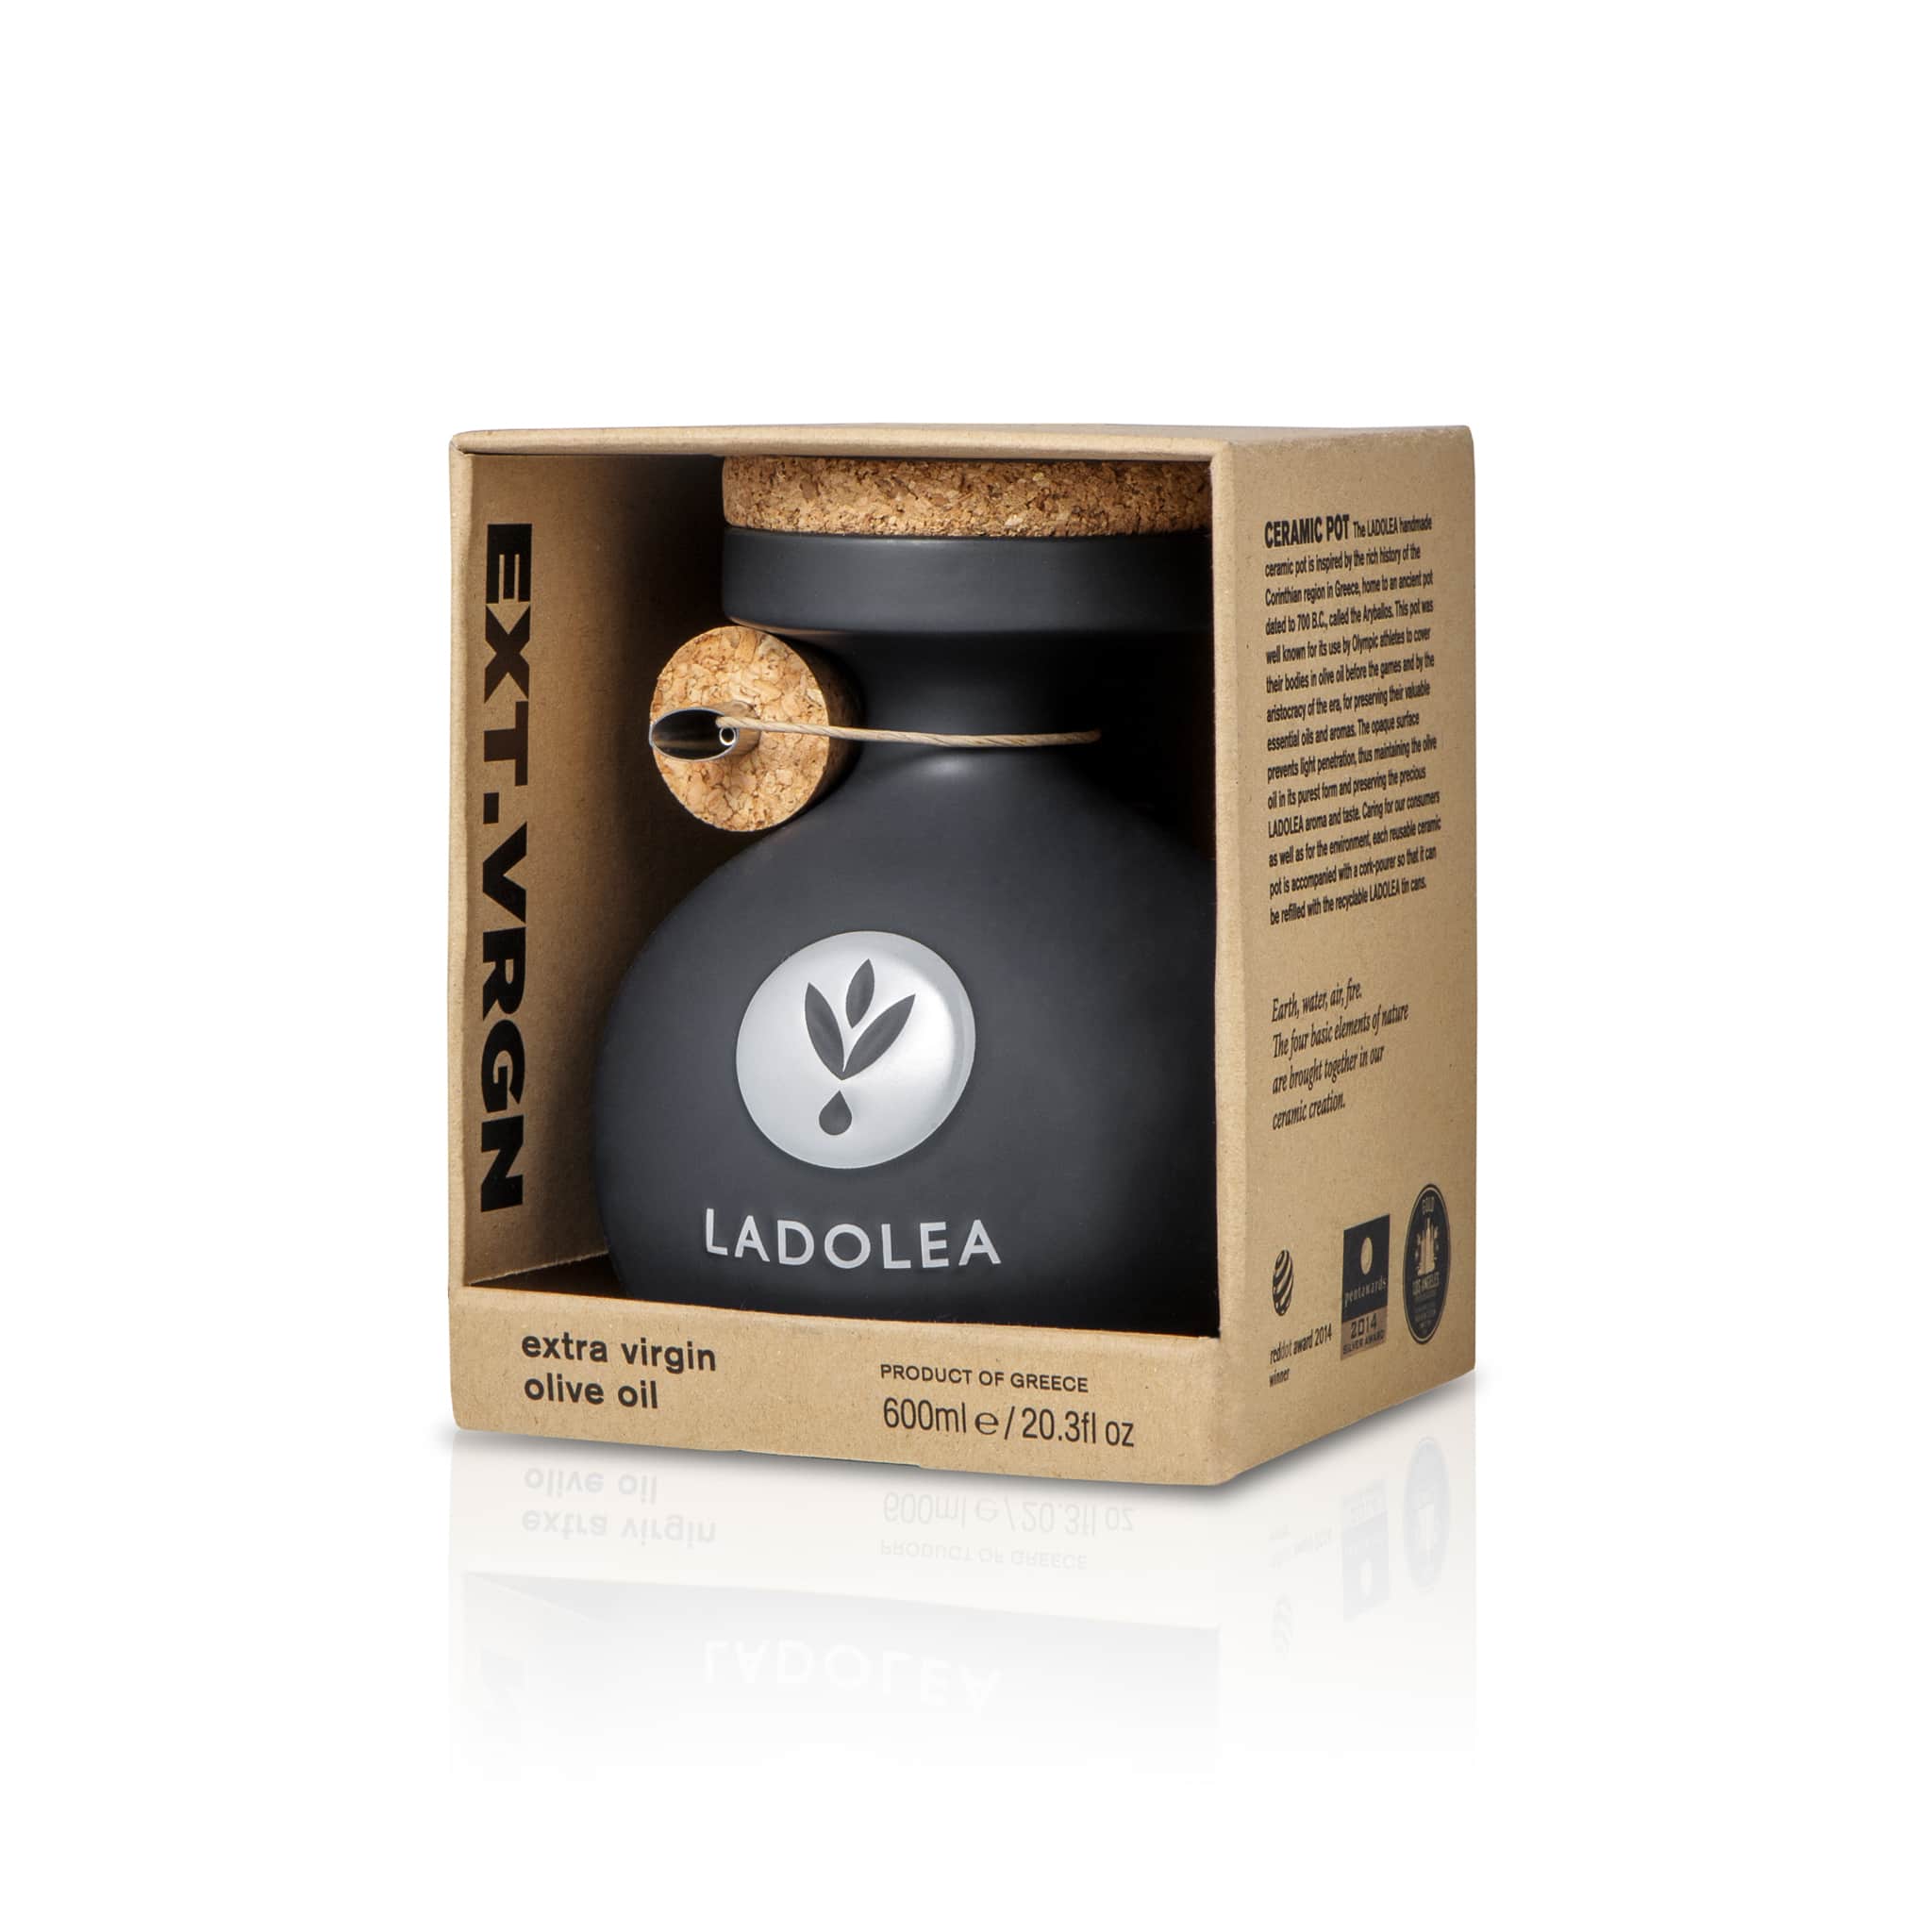 Ladolea Megaritiki Greek Intense Extra Virgin Olive Oil, 600ml